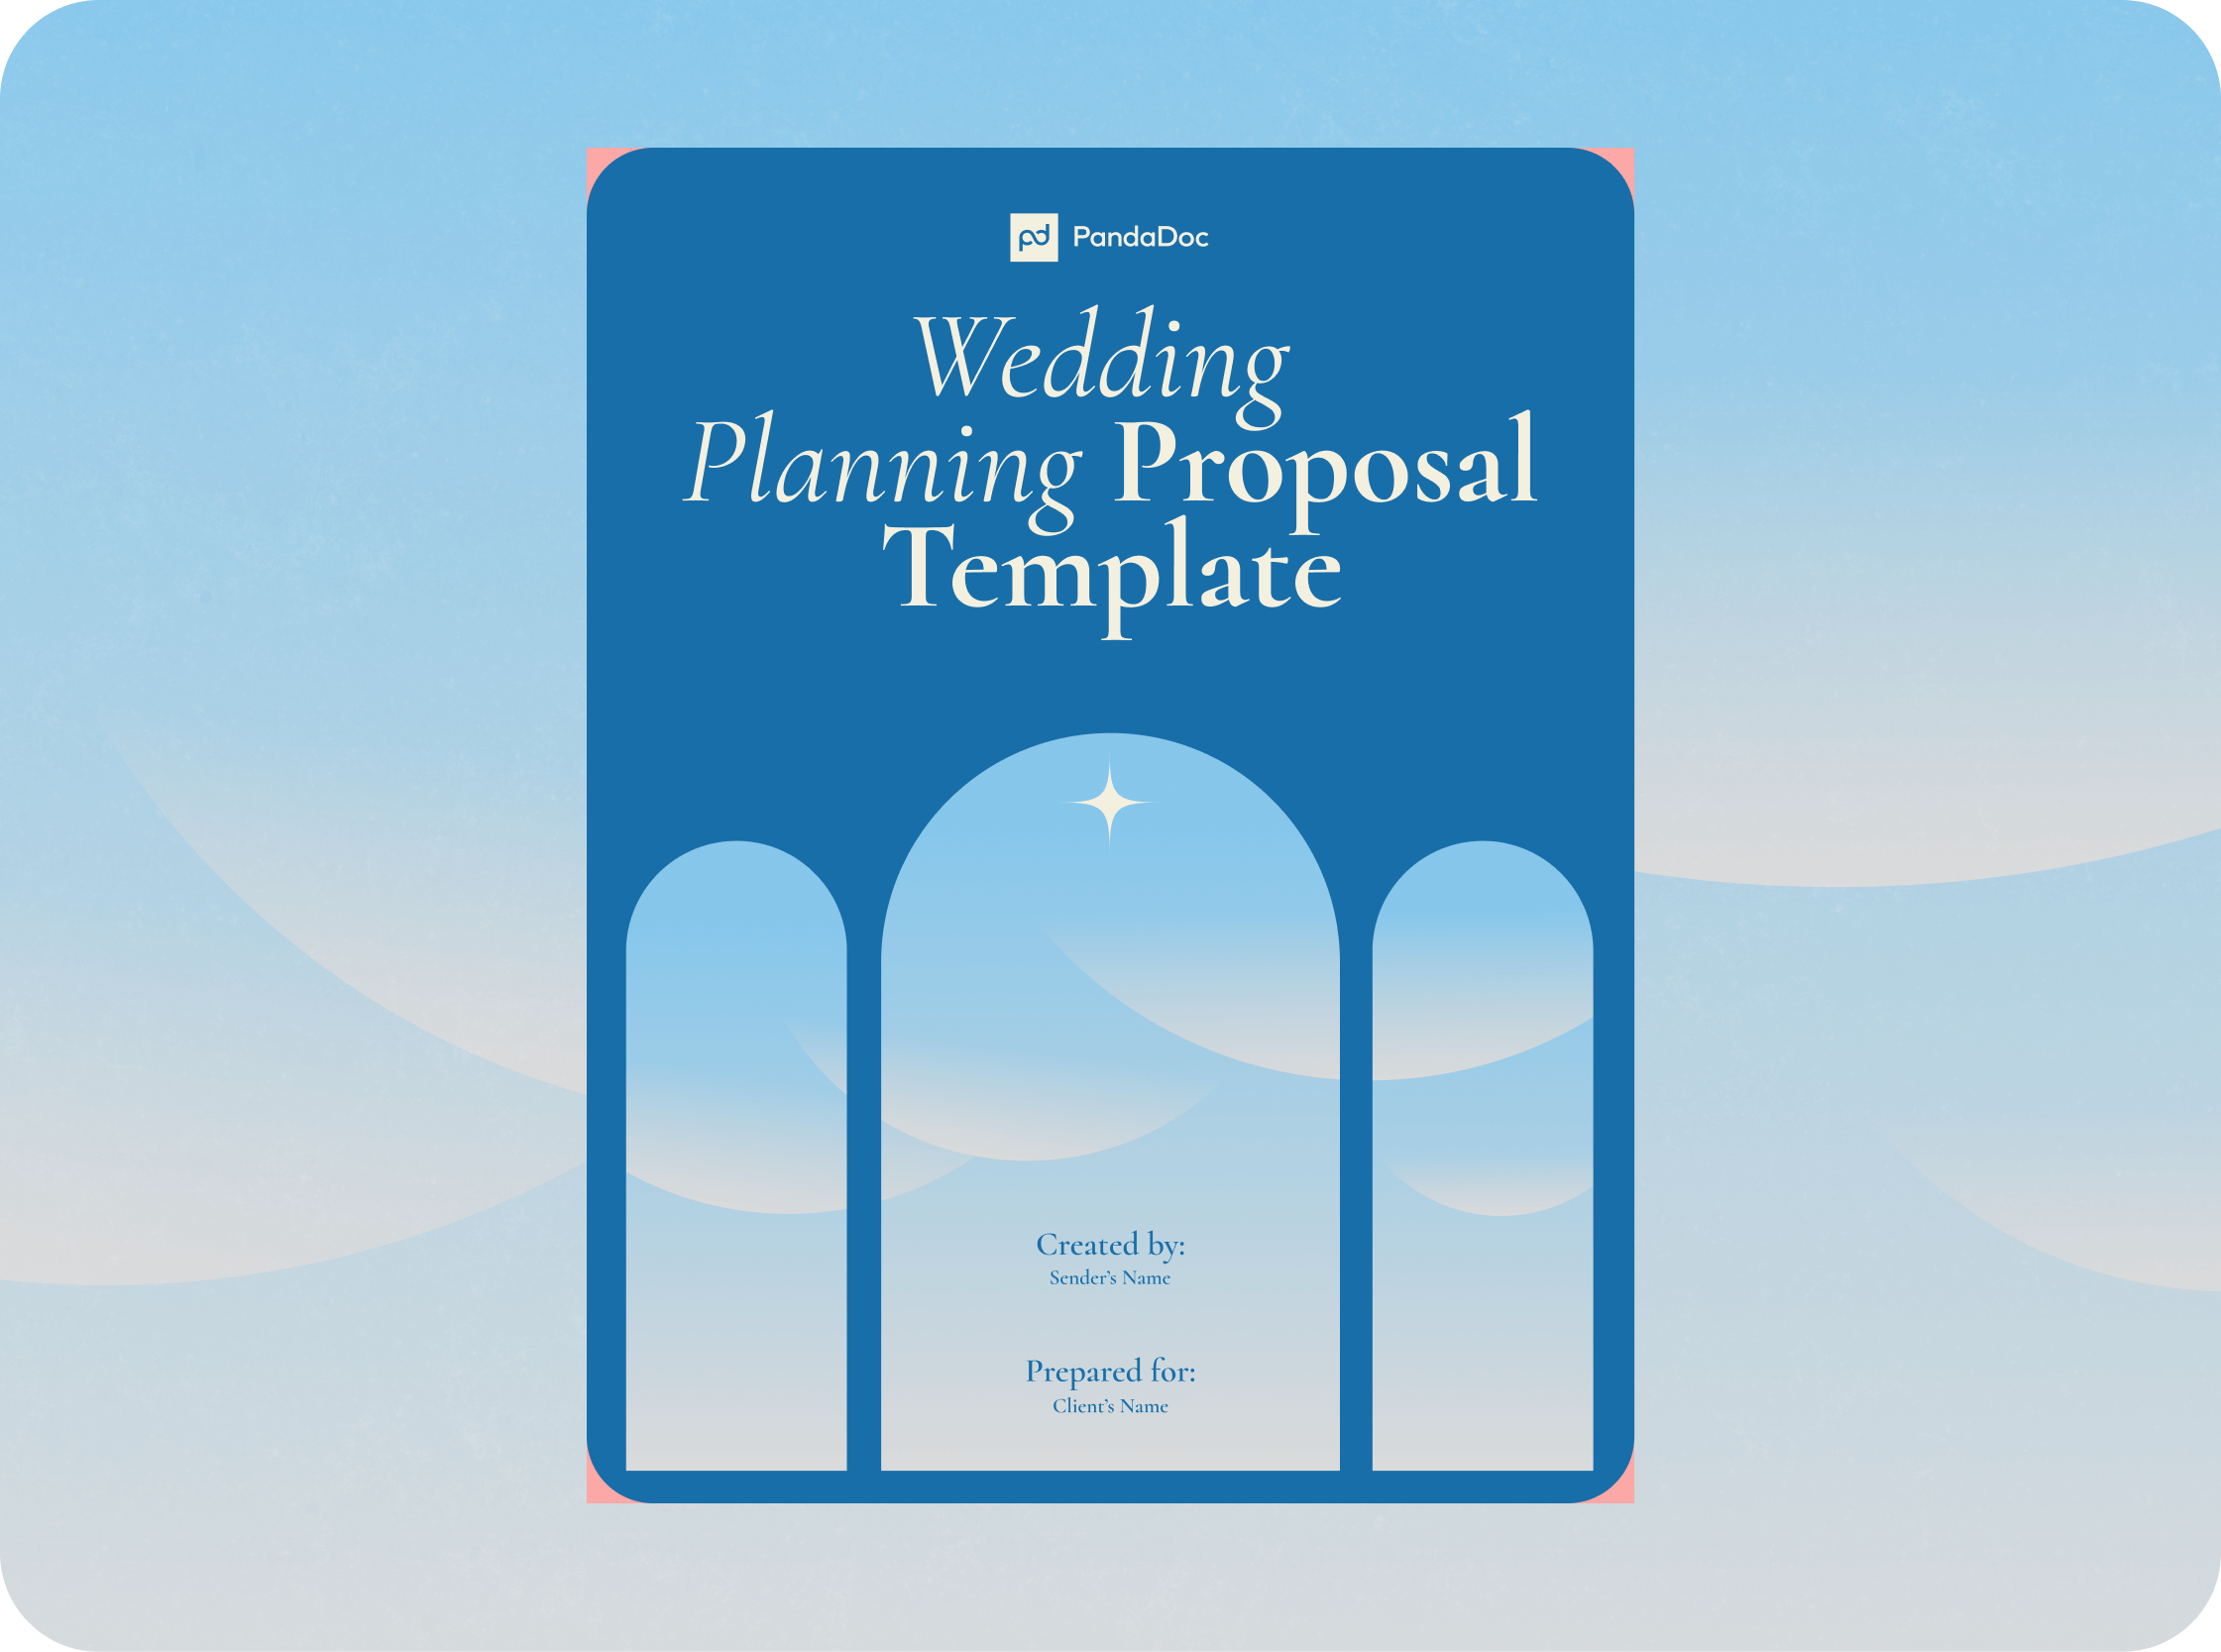 Wedding Planning Proposal Template by PandaDoc